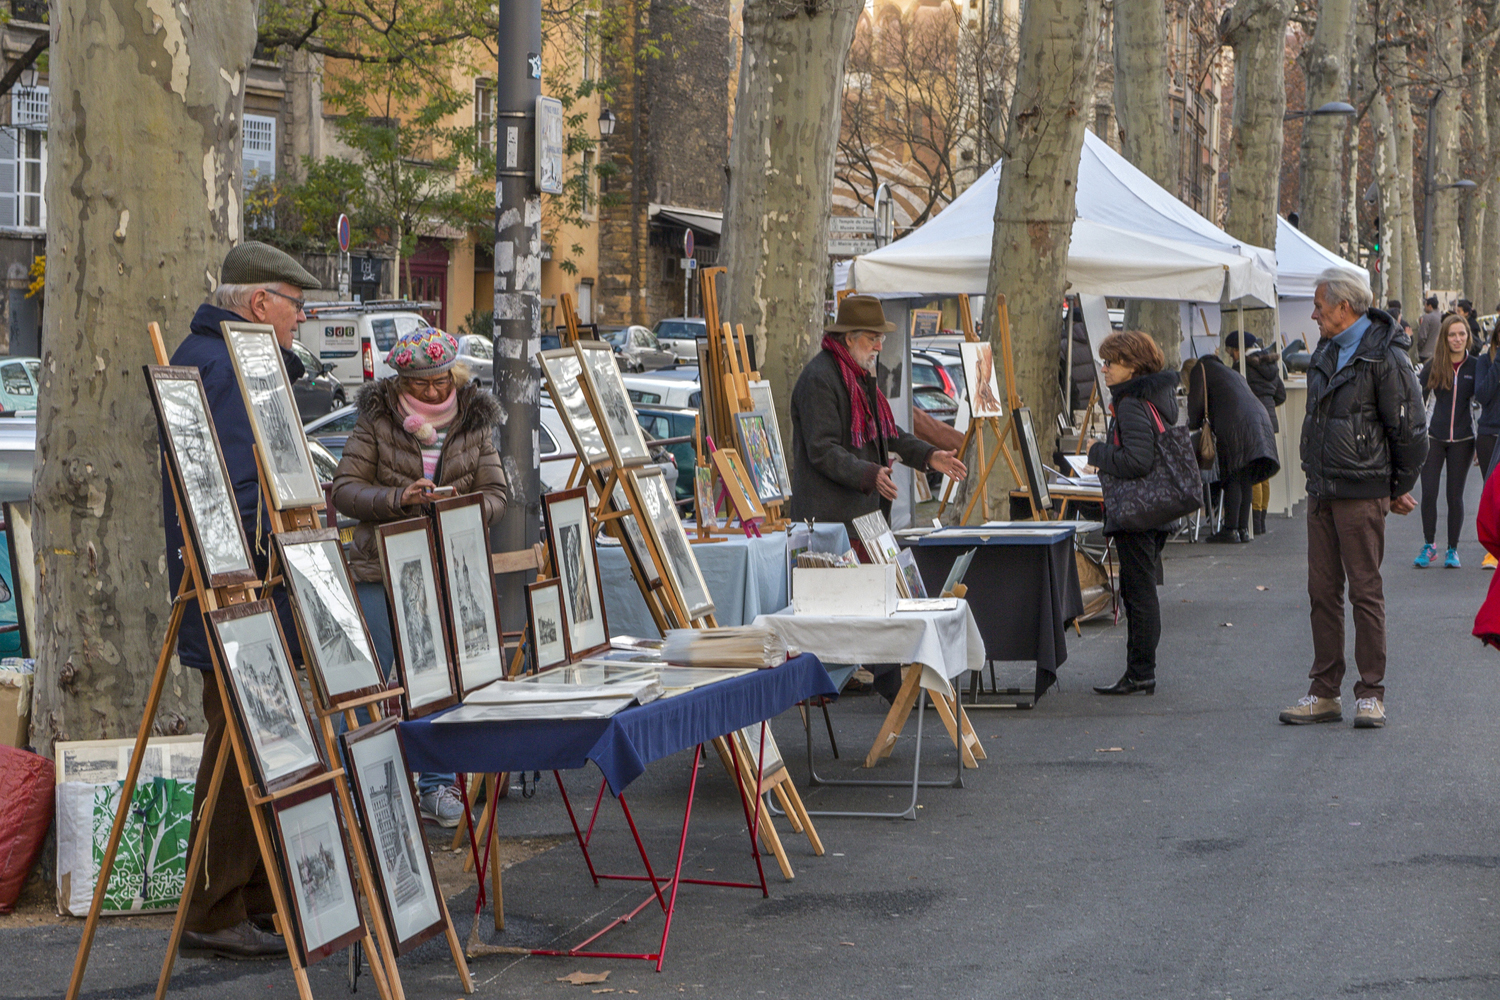 Artists selling artwork on street